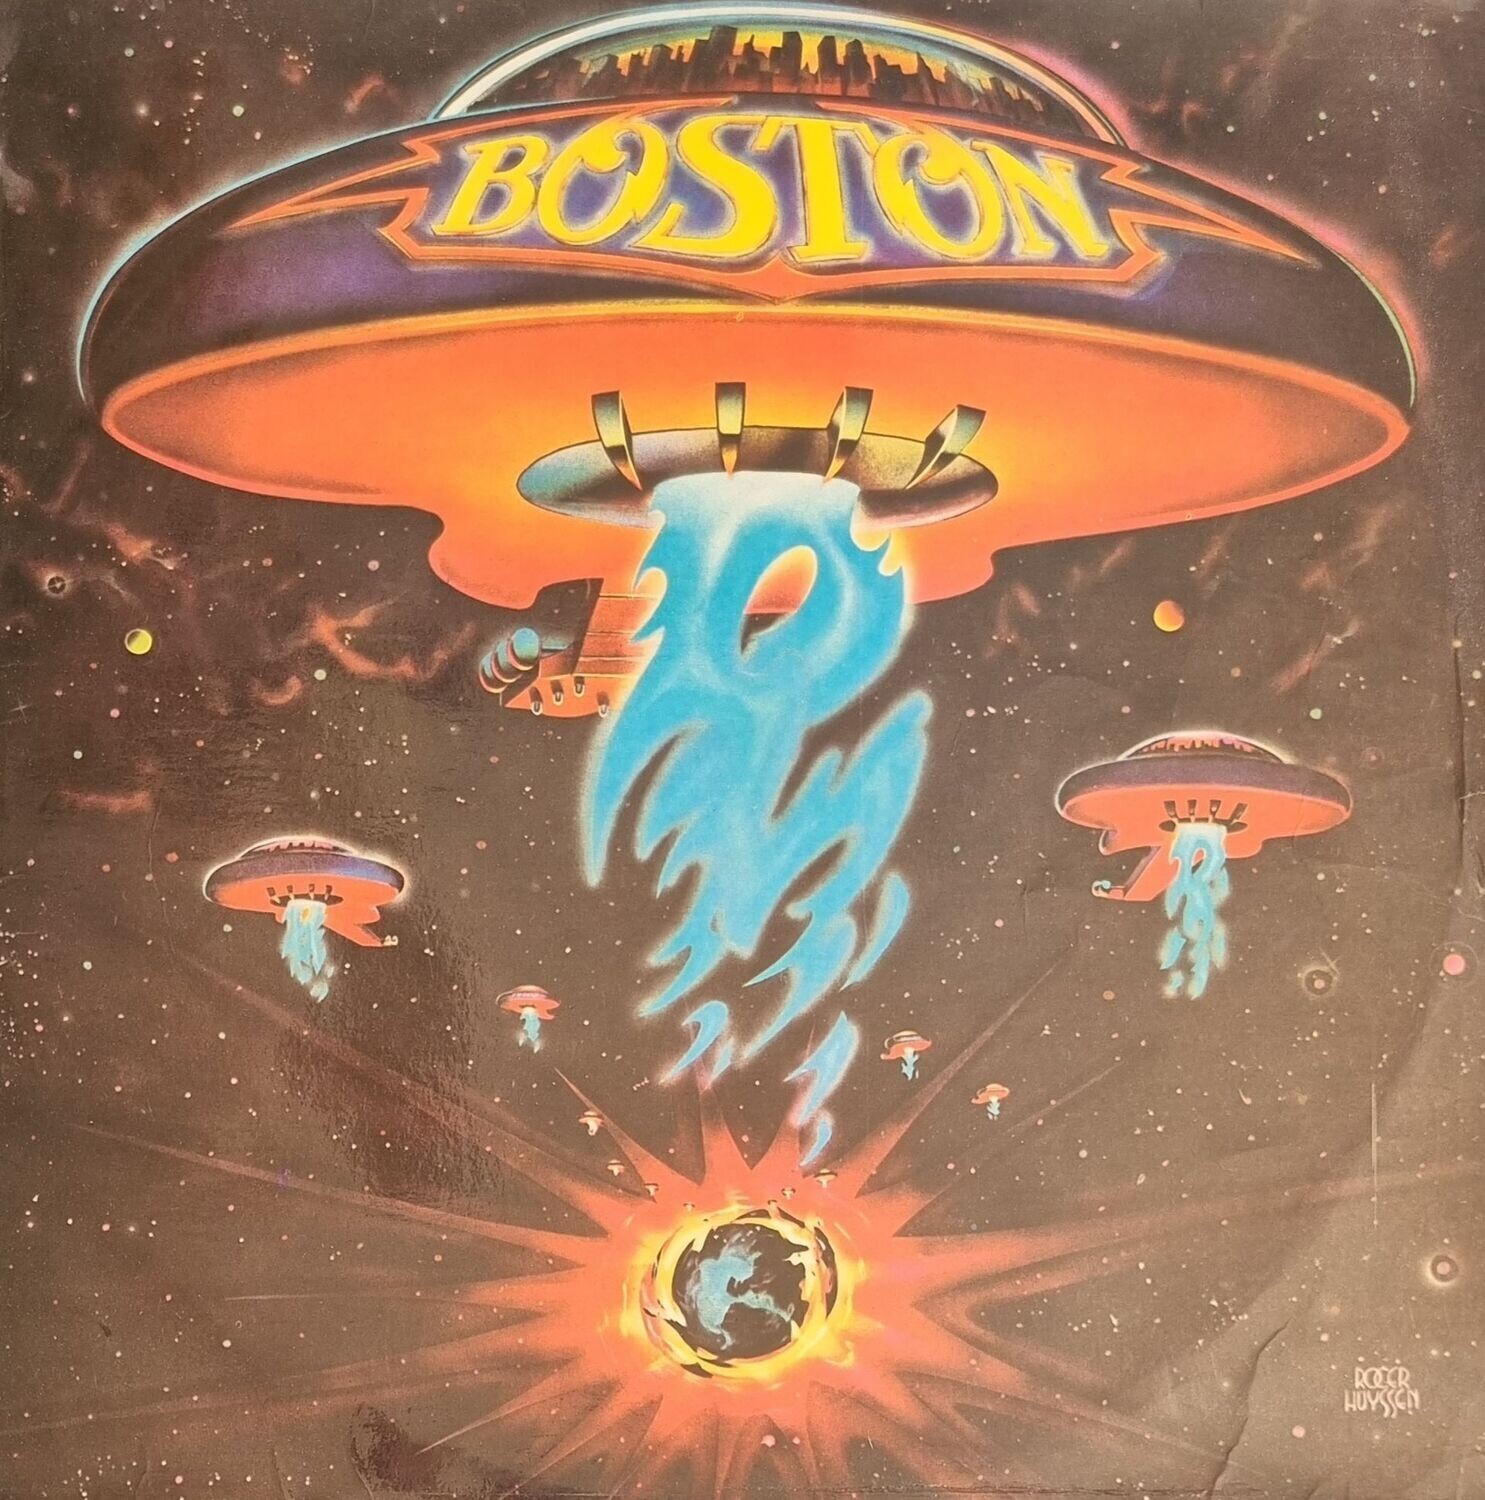 Boston – Boston (1976)